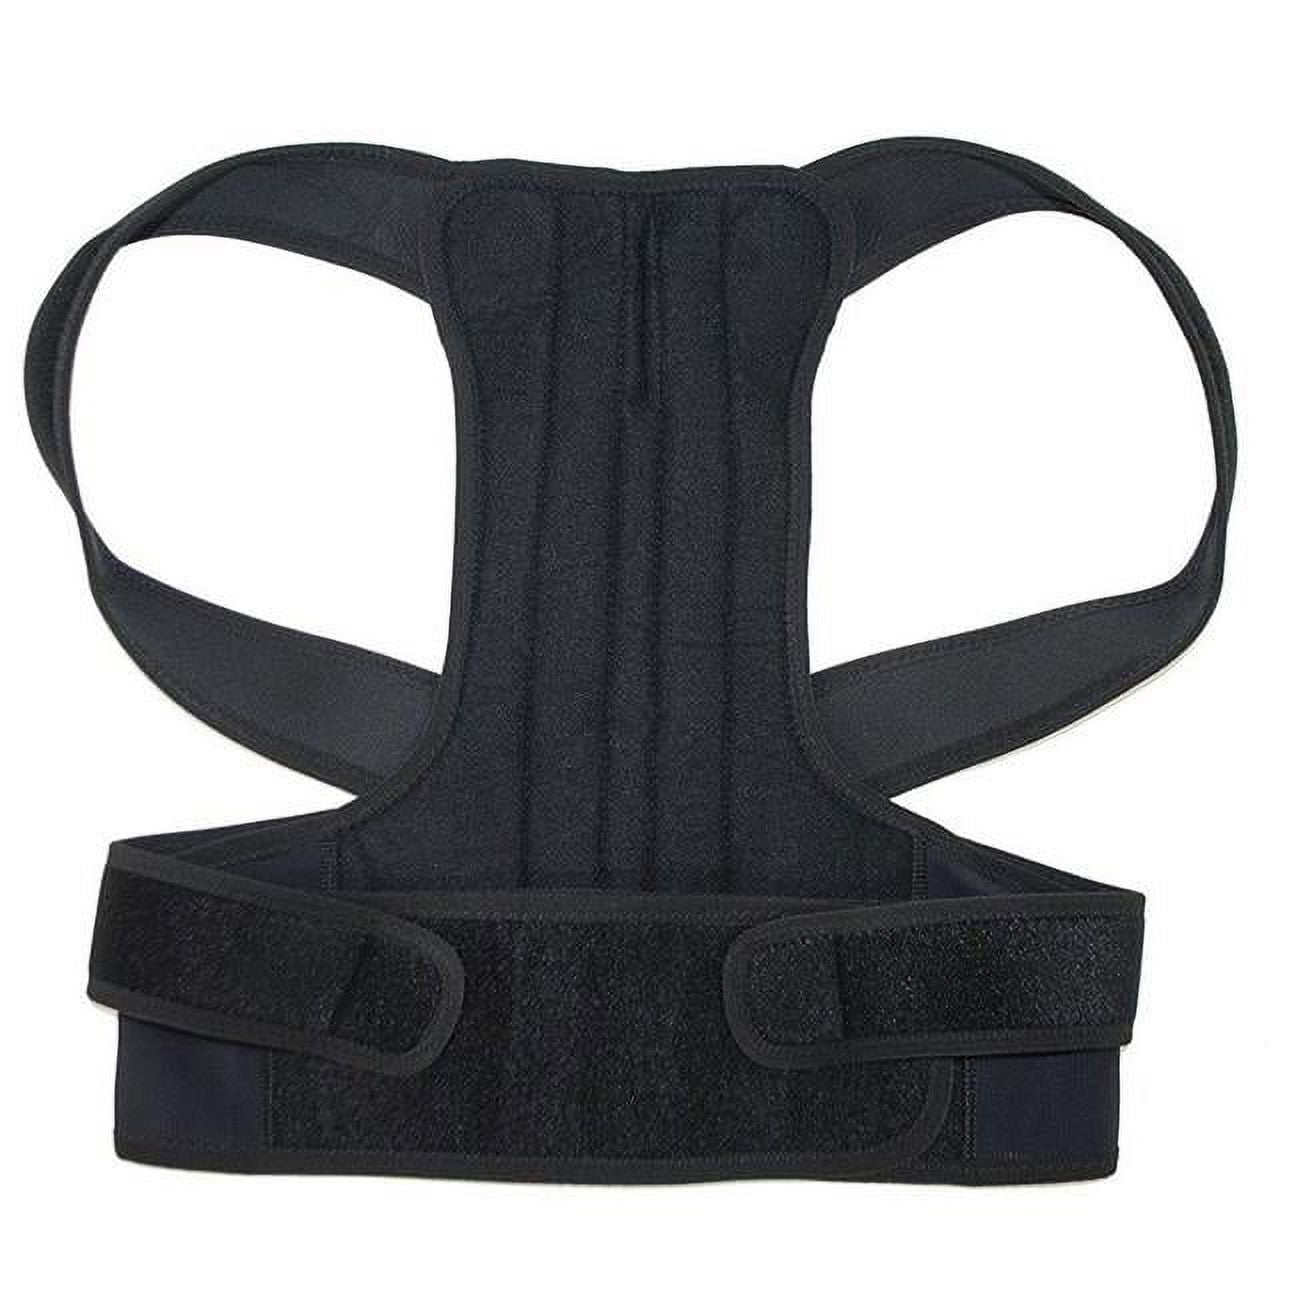 Back01xxl-unb Support Straight & Relieve Upper Back Pain With Better Posture Belt Along Lower Back Shoulder Waist, Black - 2xl